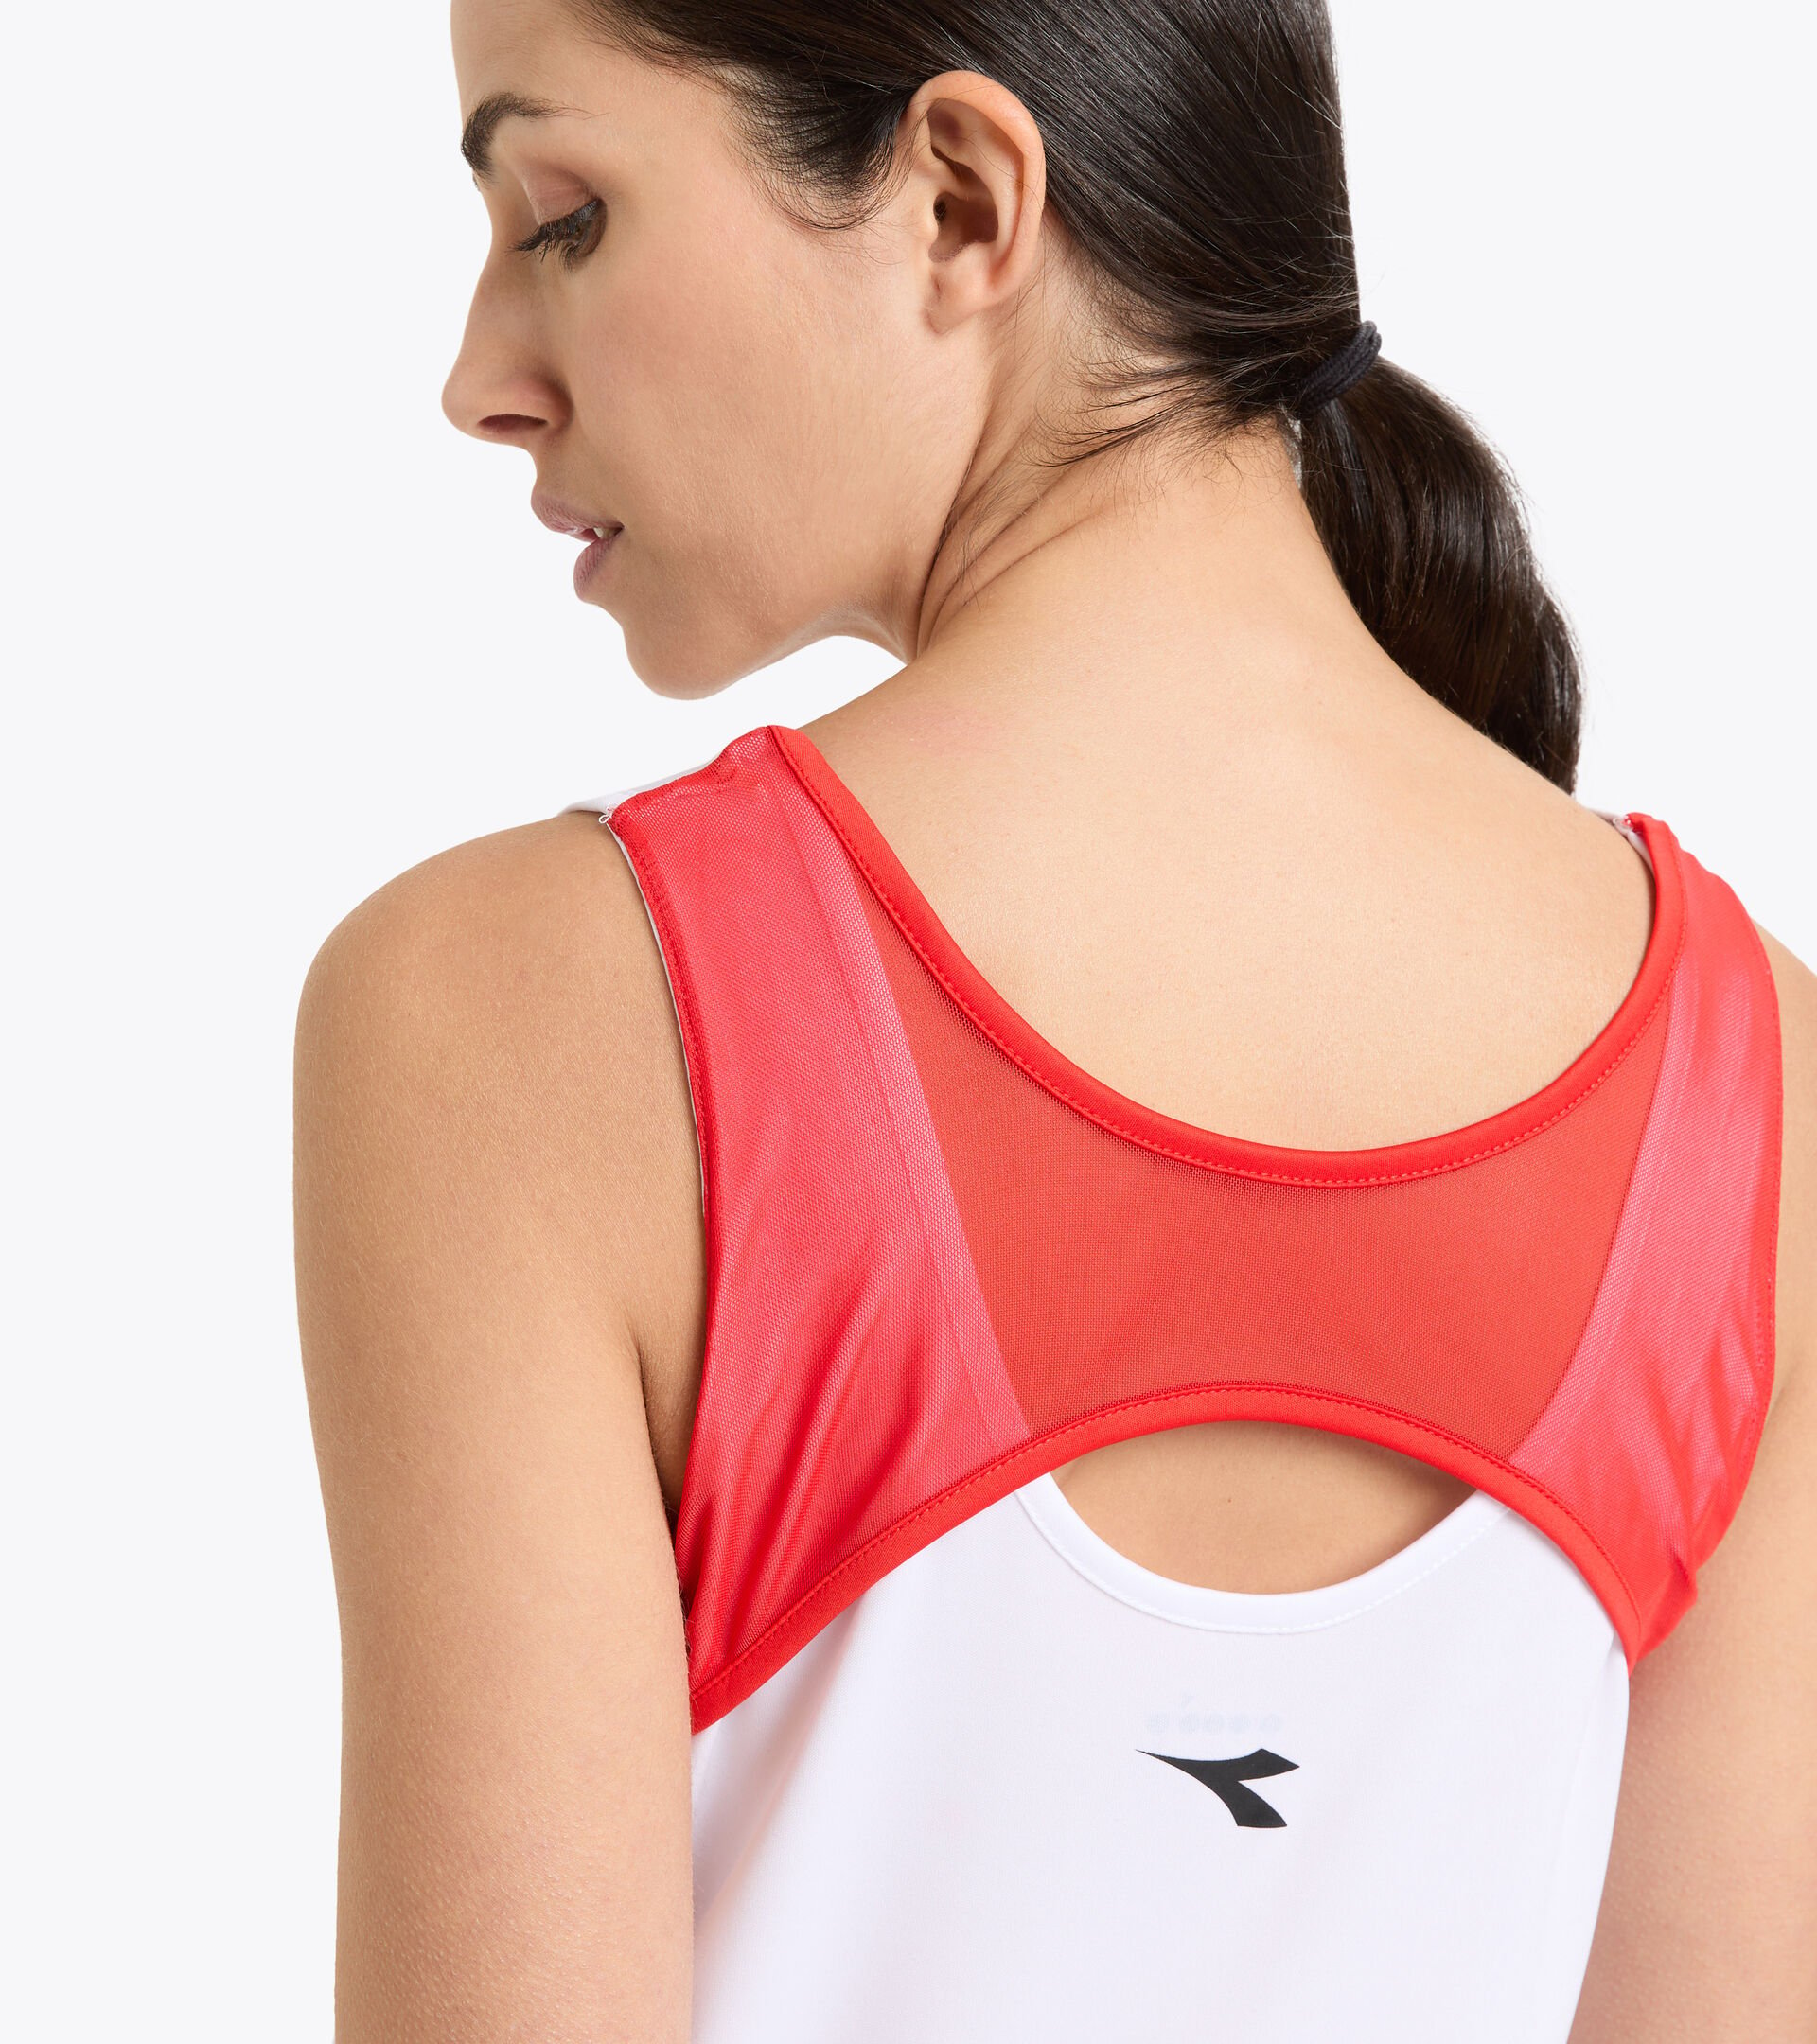 Camiseta sin mangas de tenis - Mujer L. CORE TANK BLANCO VIVO - Diadora